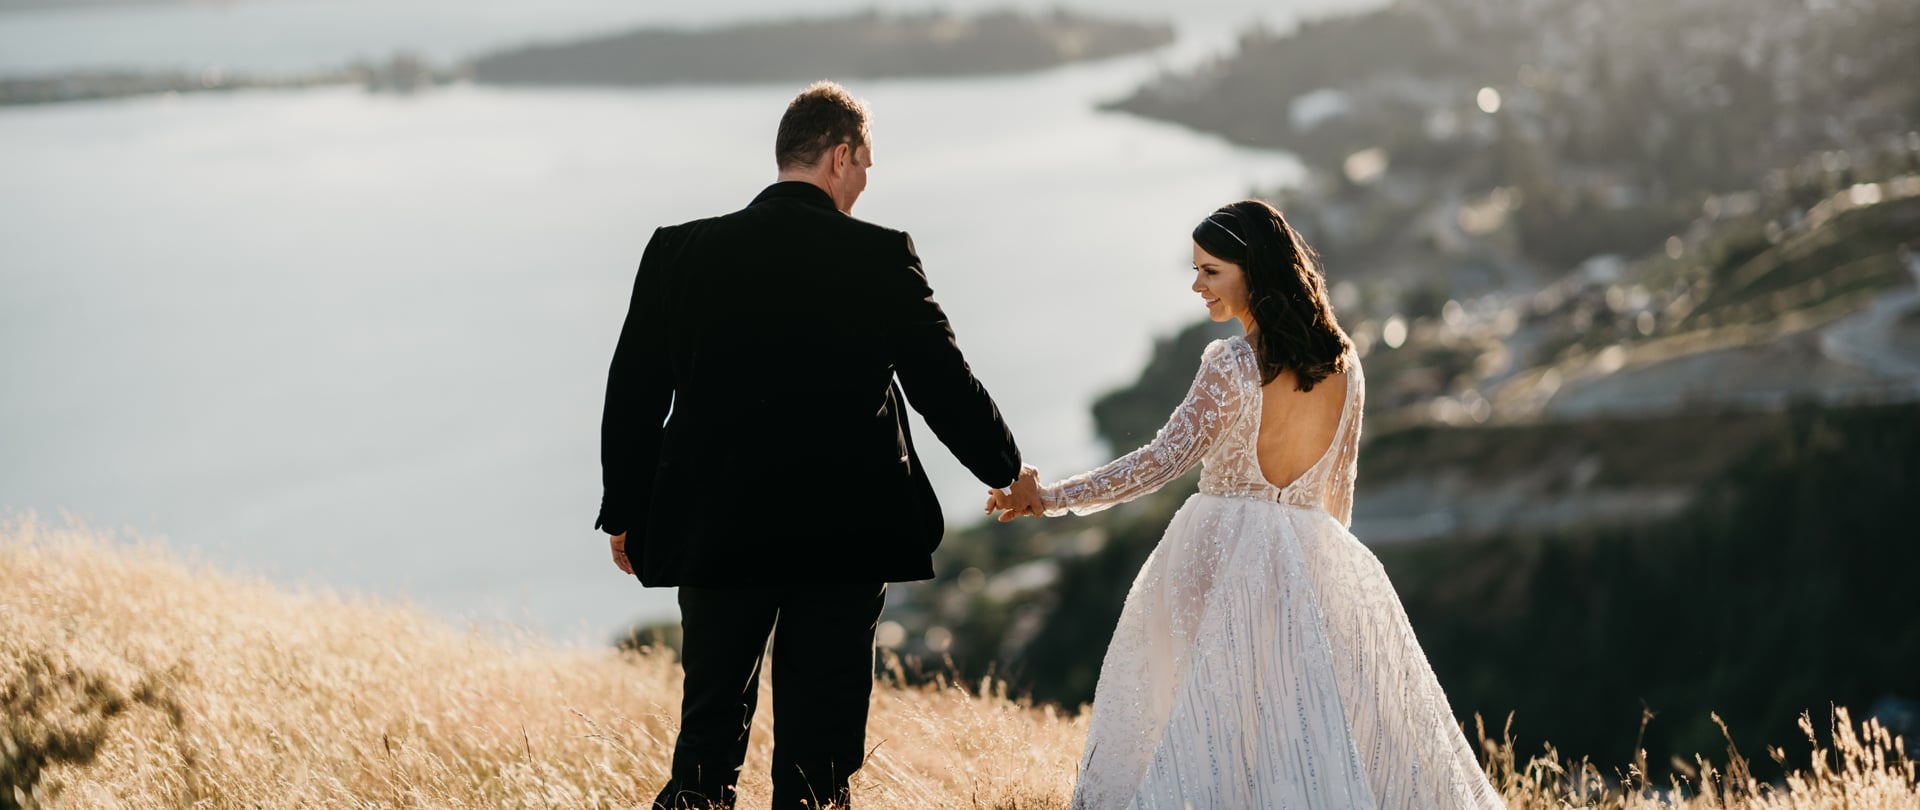 Jess & Ryan Wedding Video Filmed at Queenstown, New Zealand